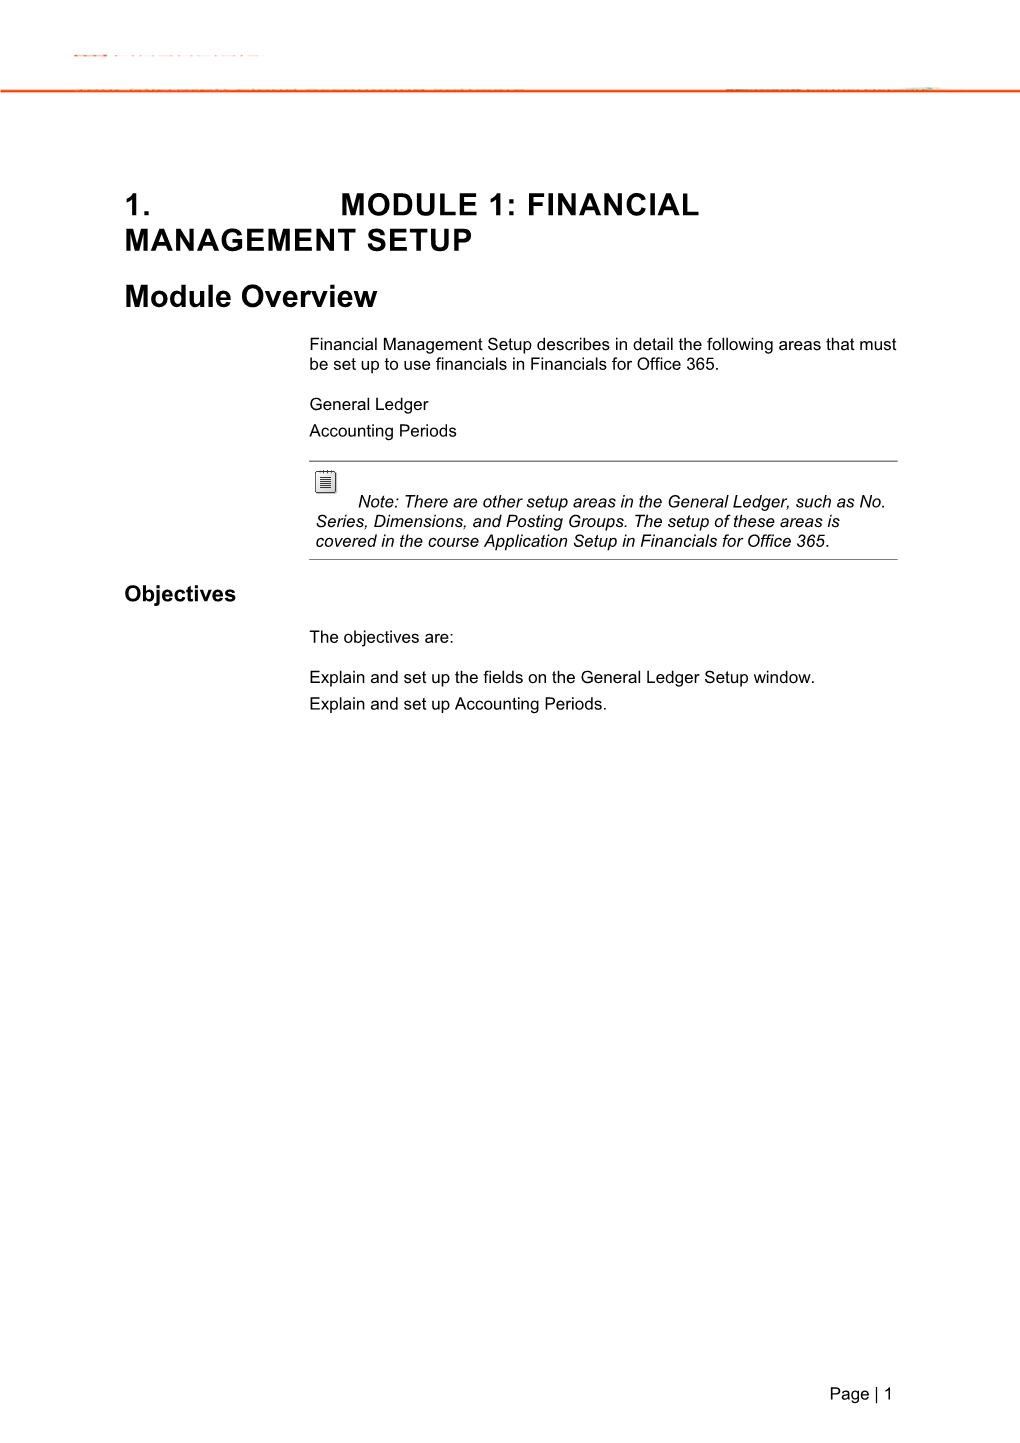 Module 1: Financial Management Setup